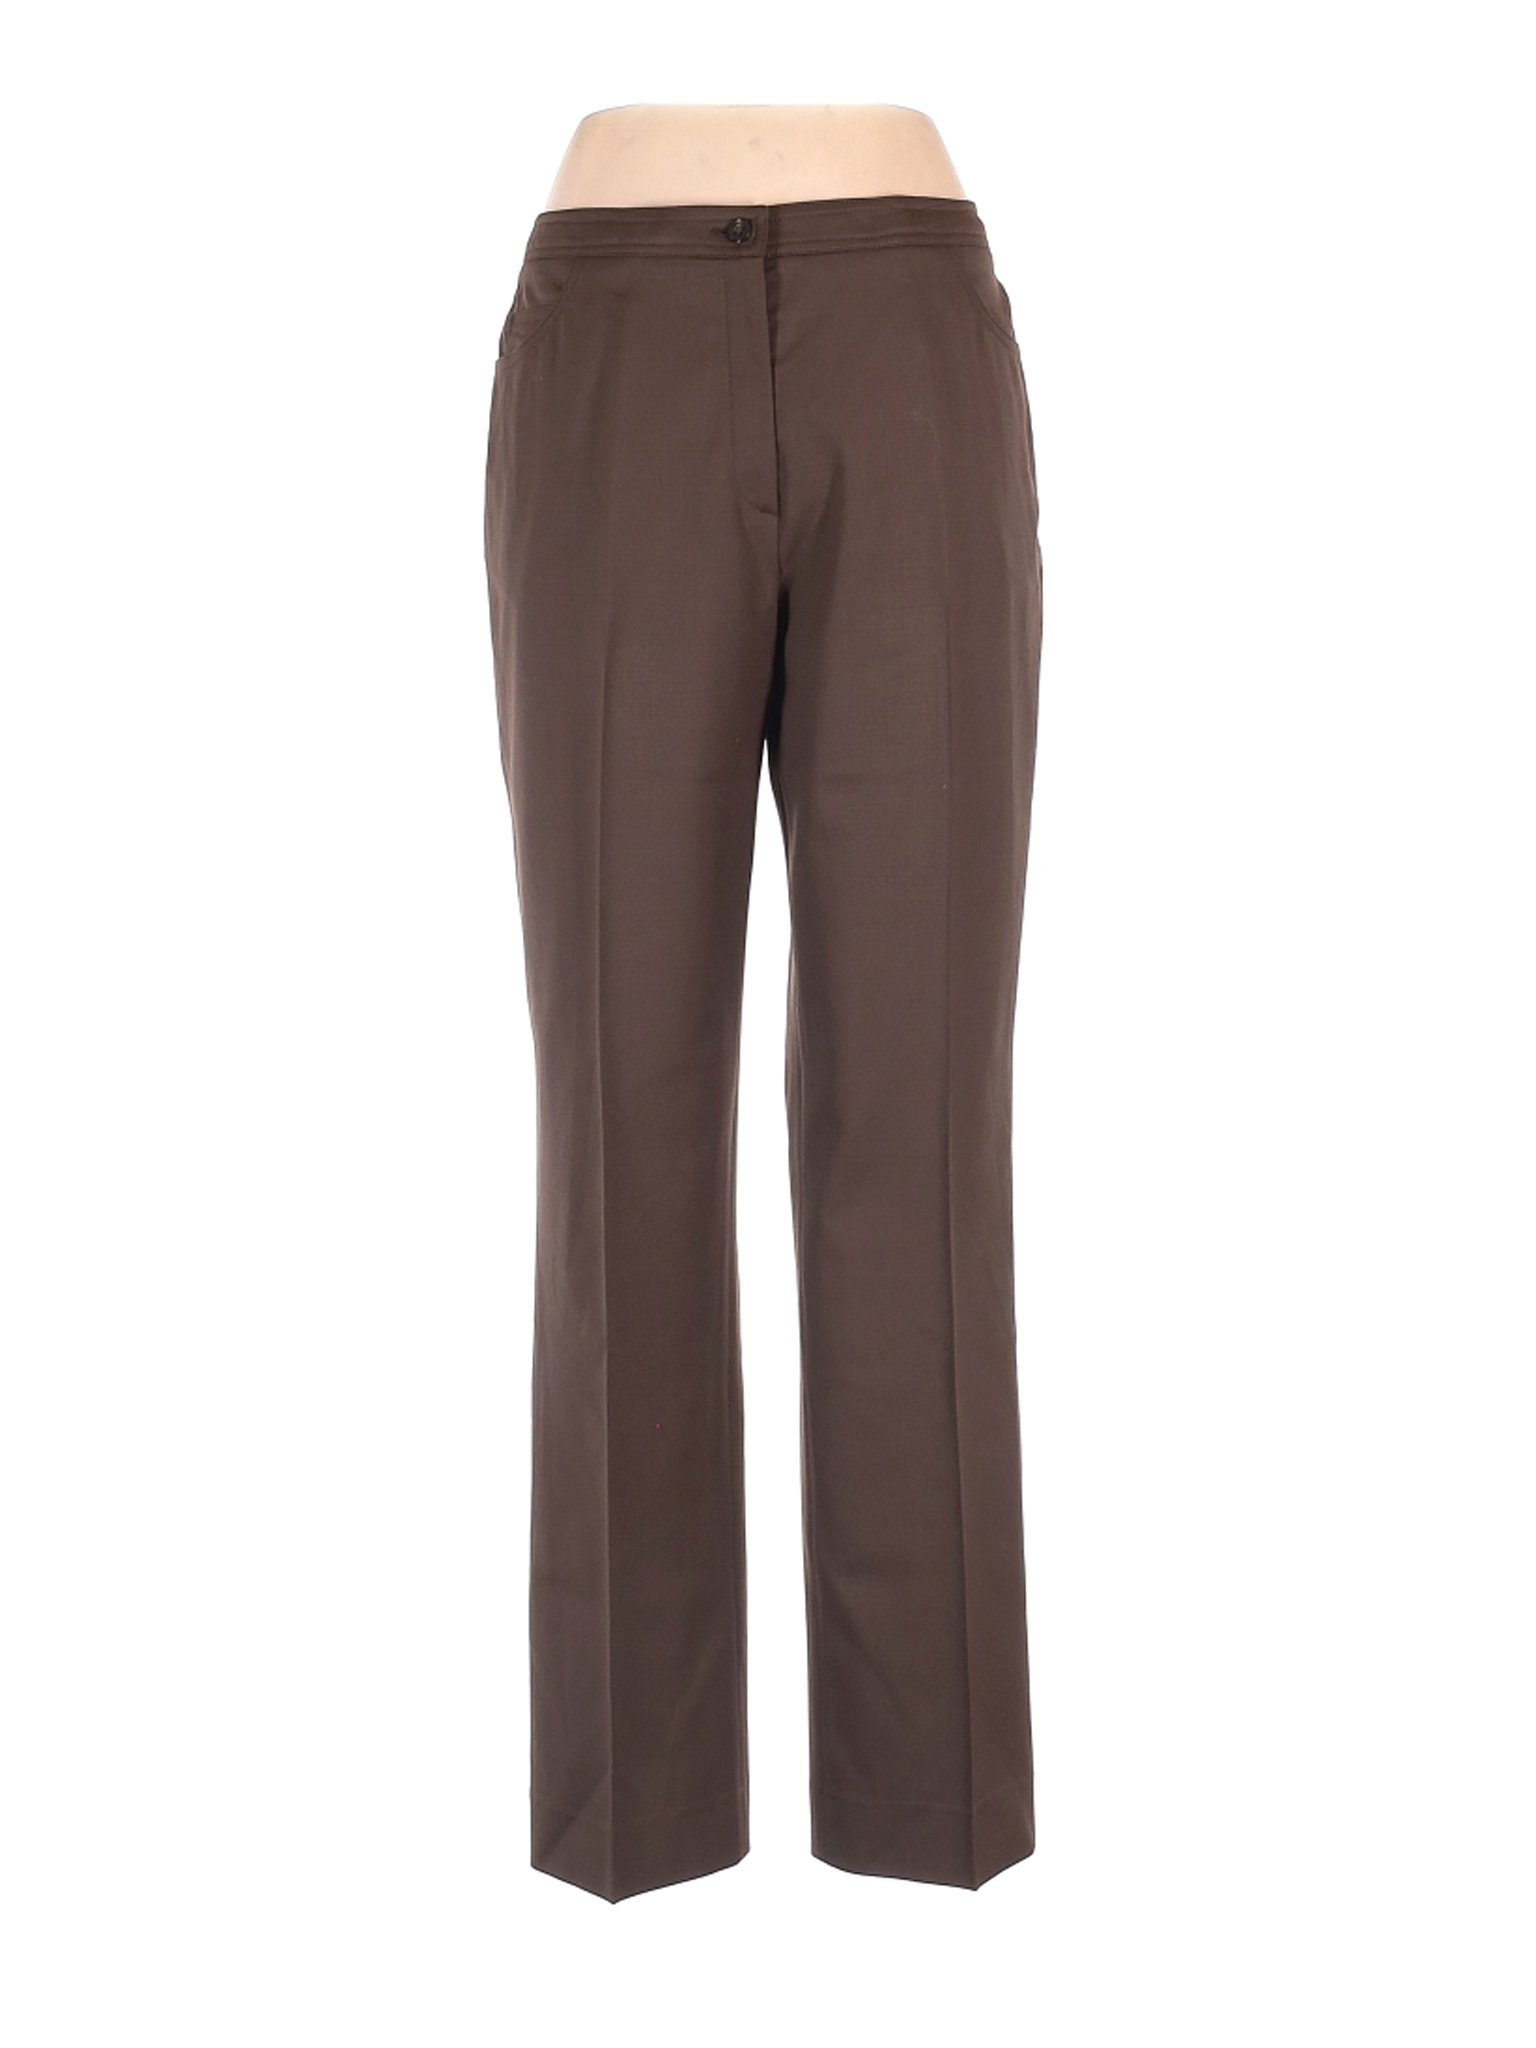 Bernard Zins Women Brown Wool Pants 10 | eBay